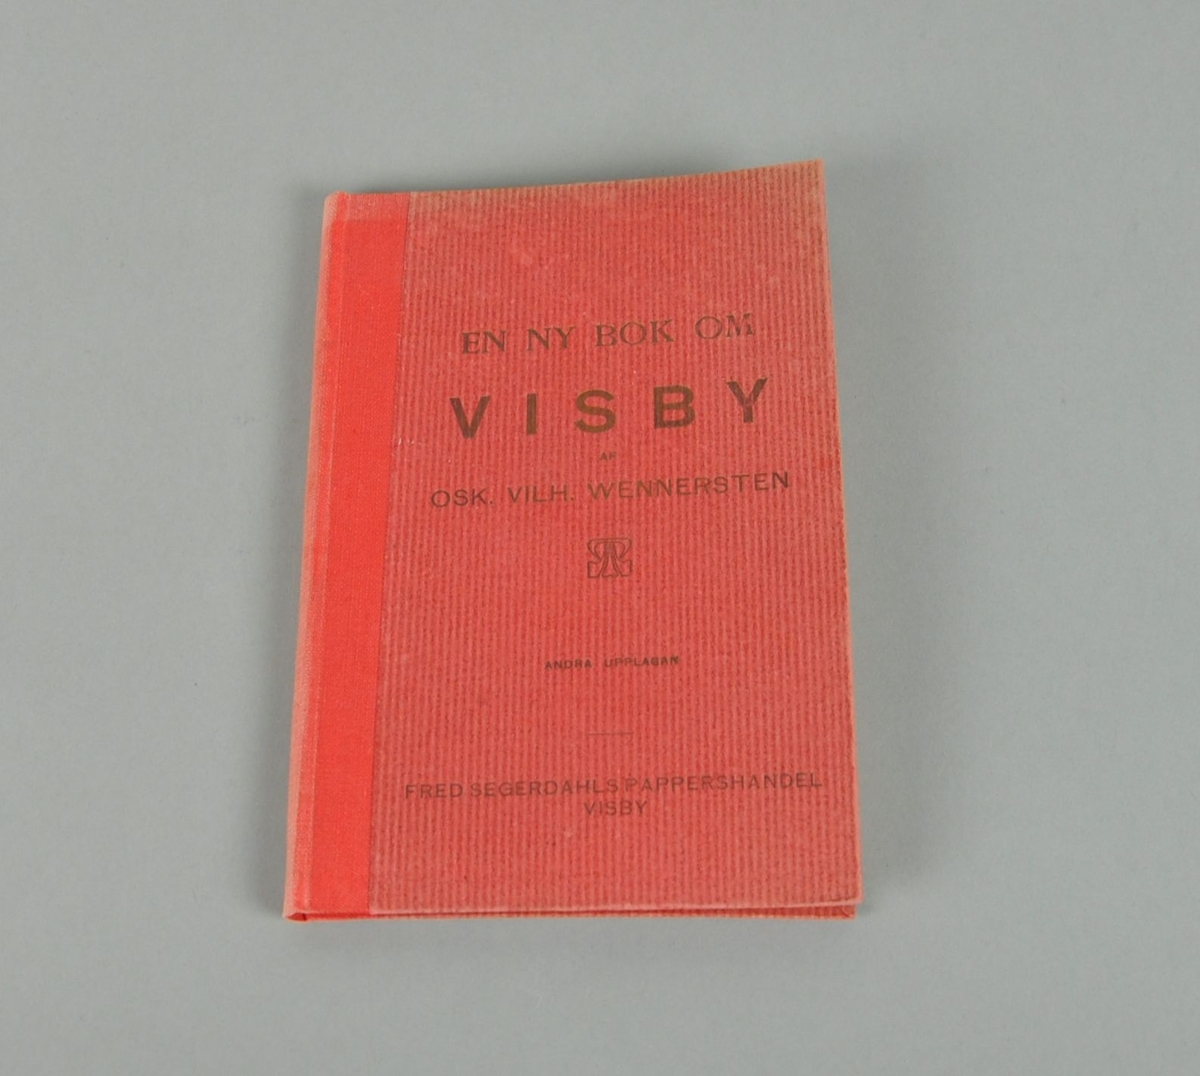 Reisehåndbok fra Visby, bundet i rød papp.